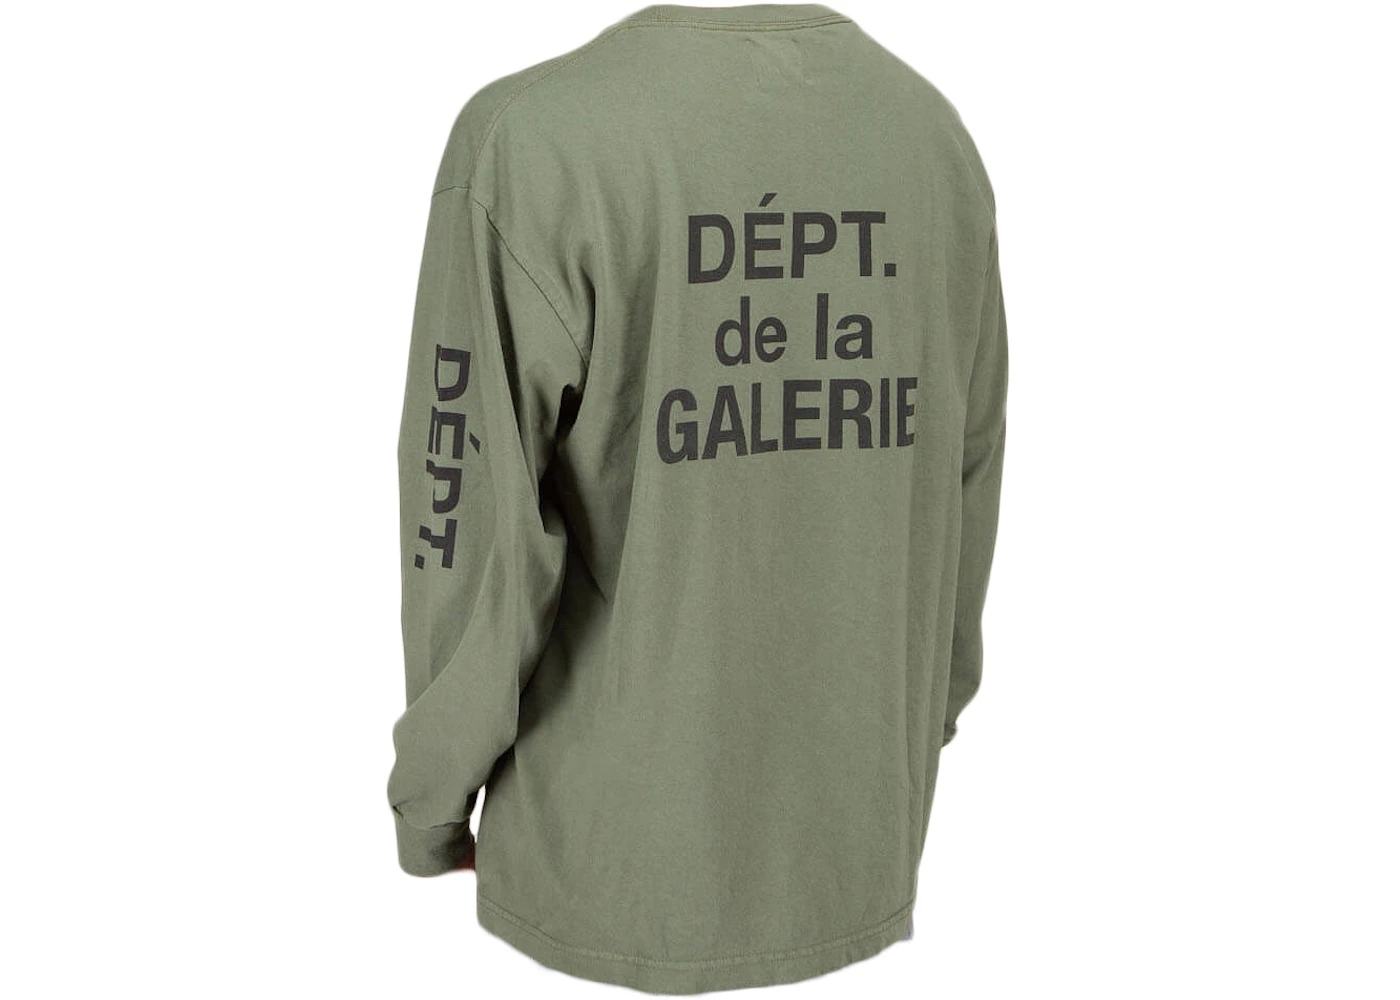 Gallery Dept. French Souvenir L/S T-shirt Olive Green Men's - US